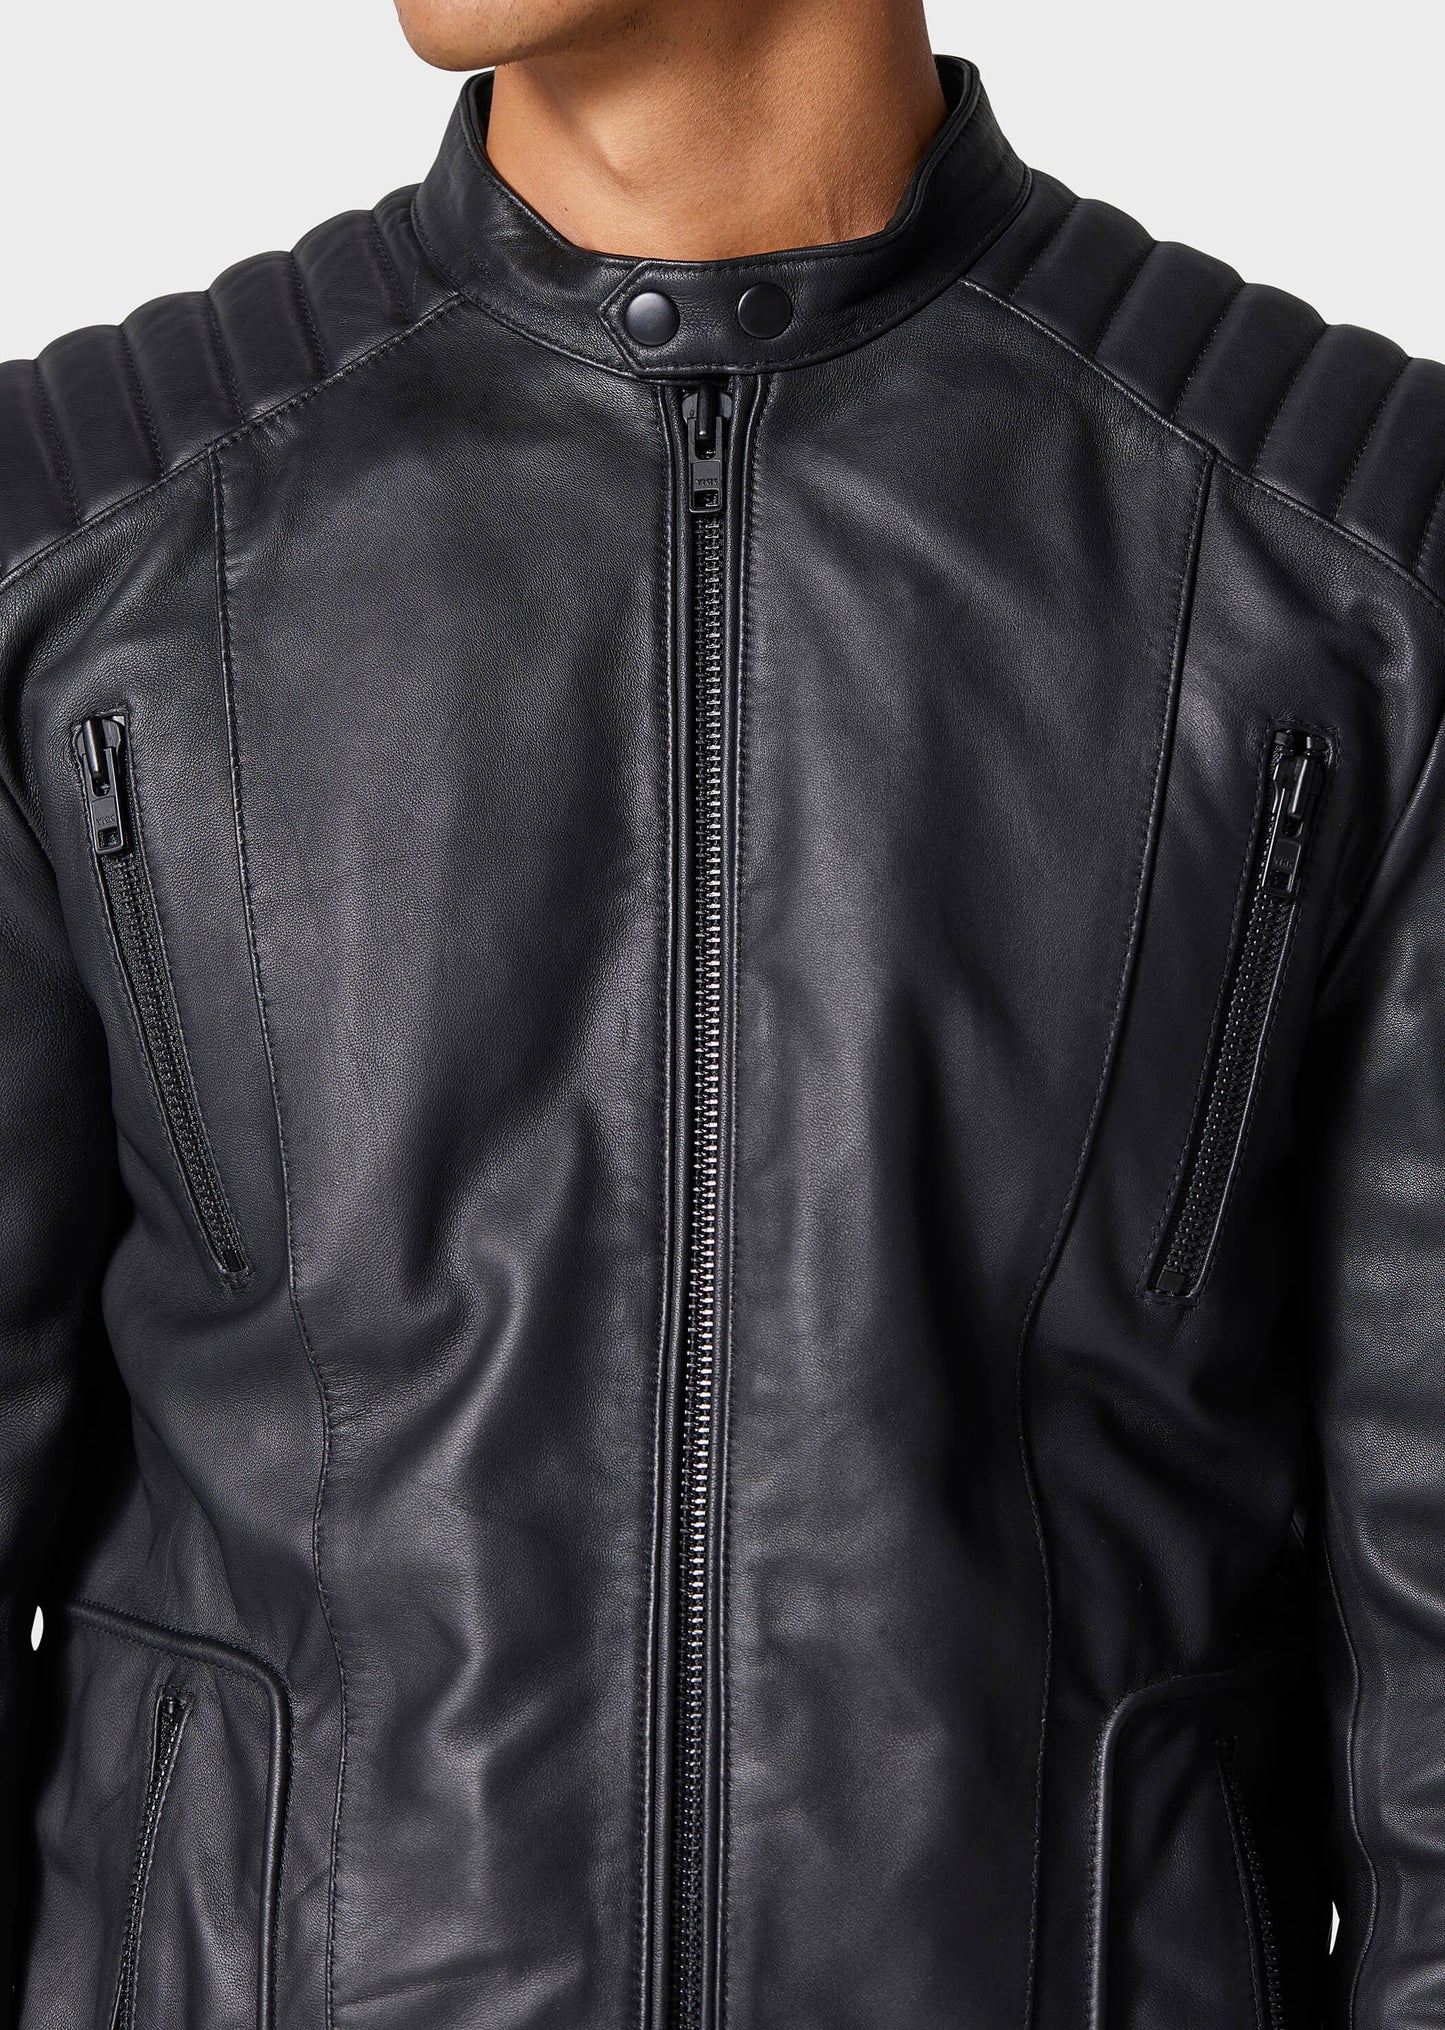 Police Tracks Black Men's Leather Jacket | 883 Police